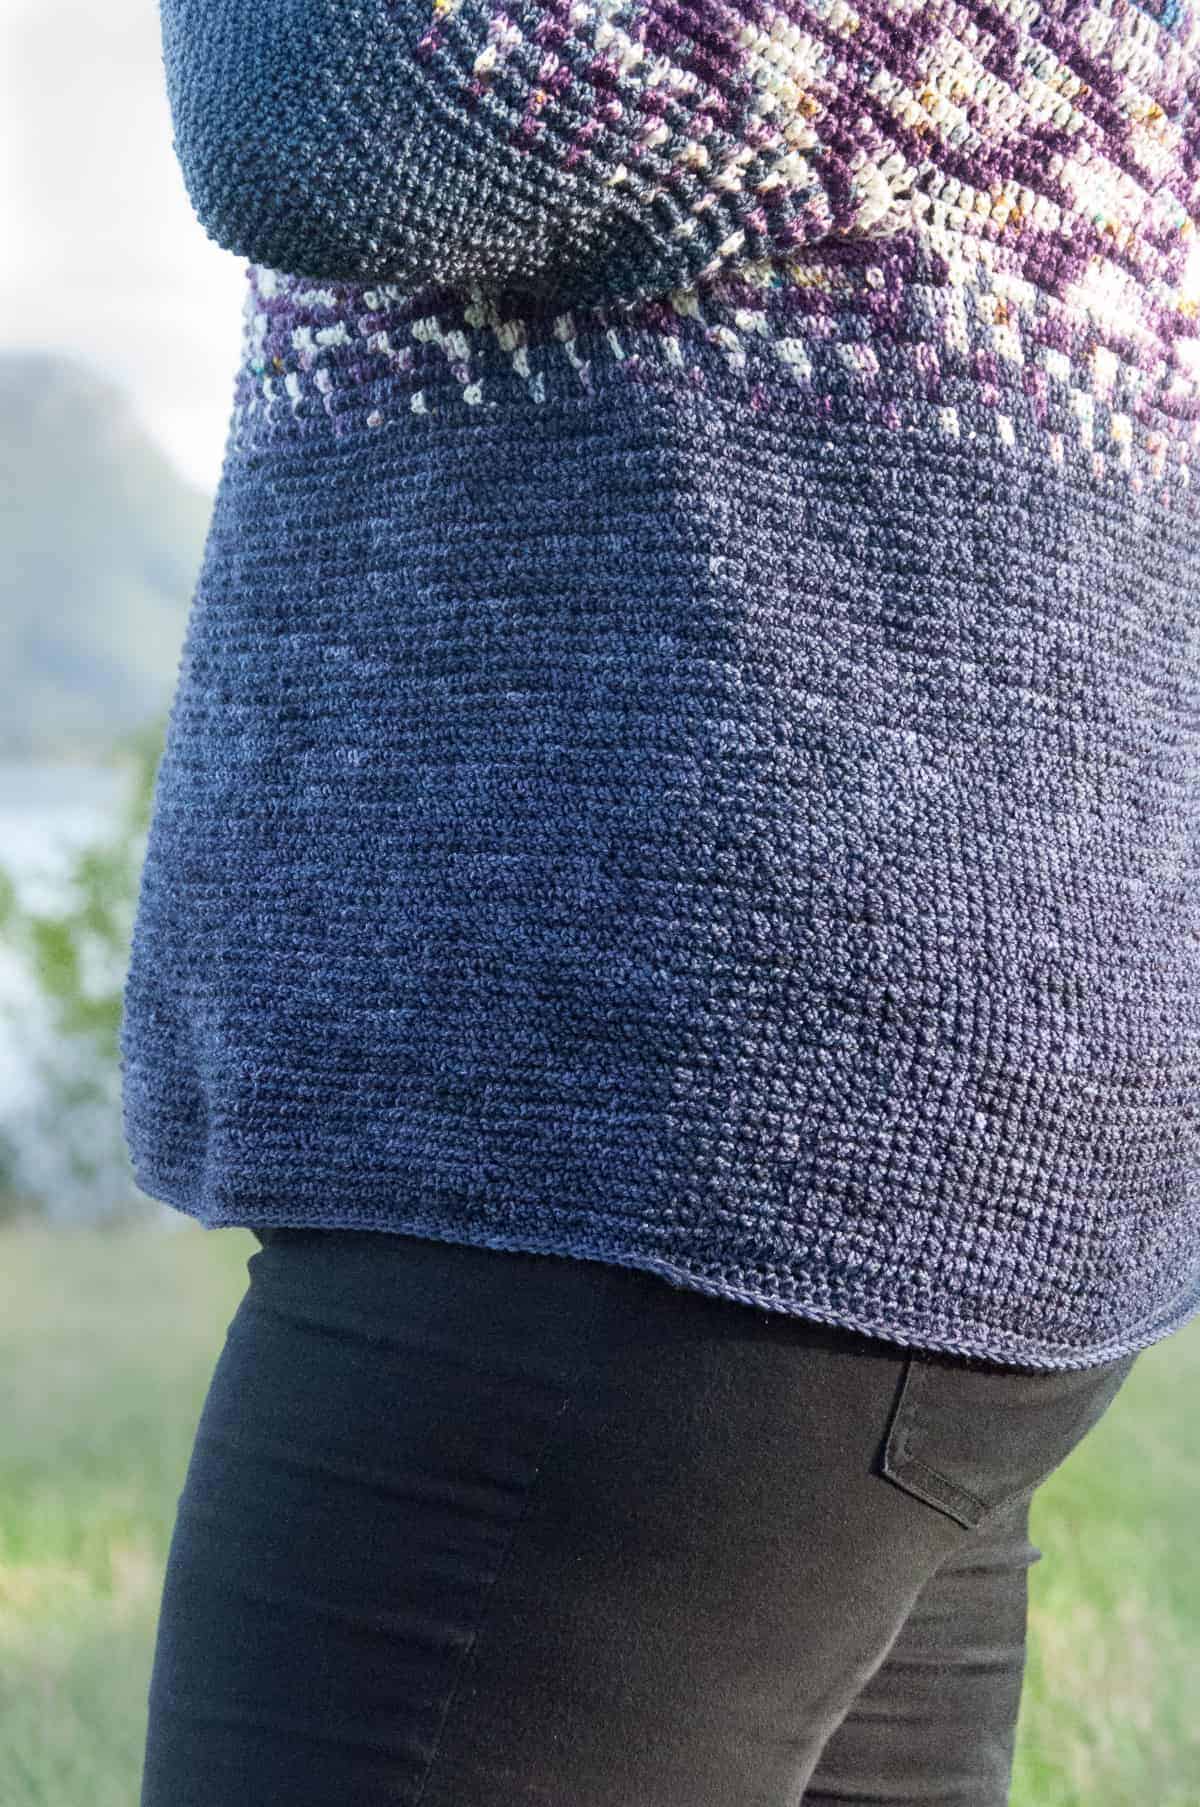 crochet gradvis sweater free crochet pattern, crochet sweater modeled, made with hand dyed yarn